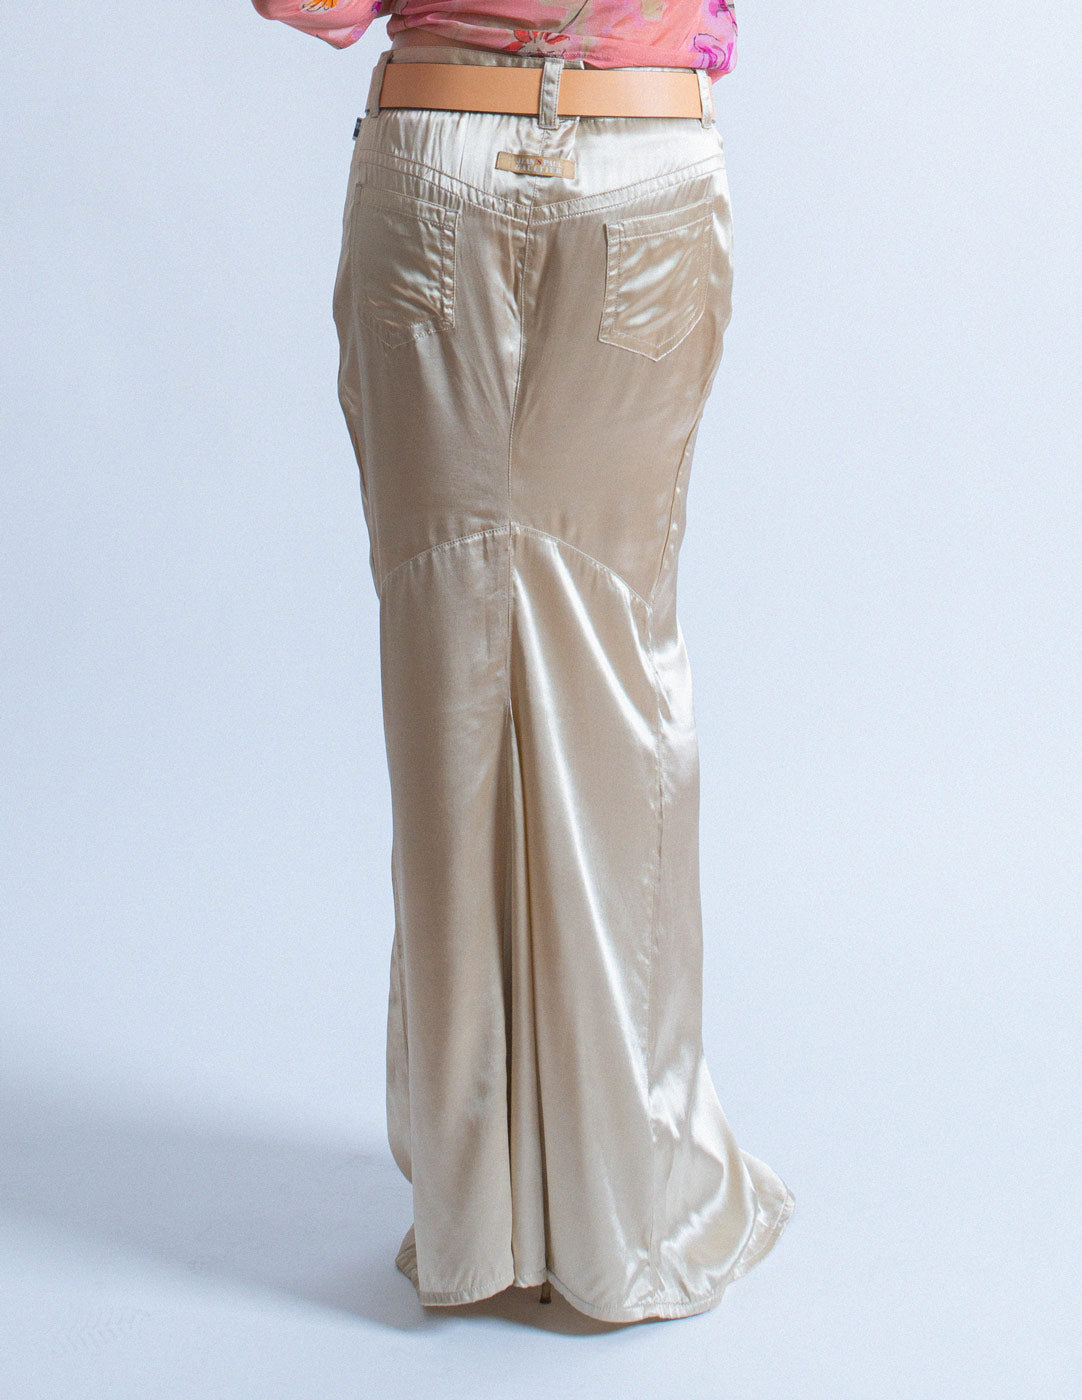 Jean Paul Gaultier vintage gold maxi skirt back detail